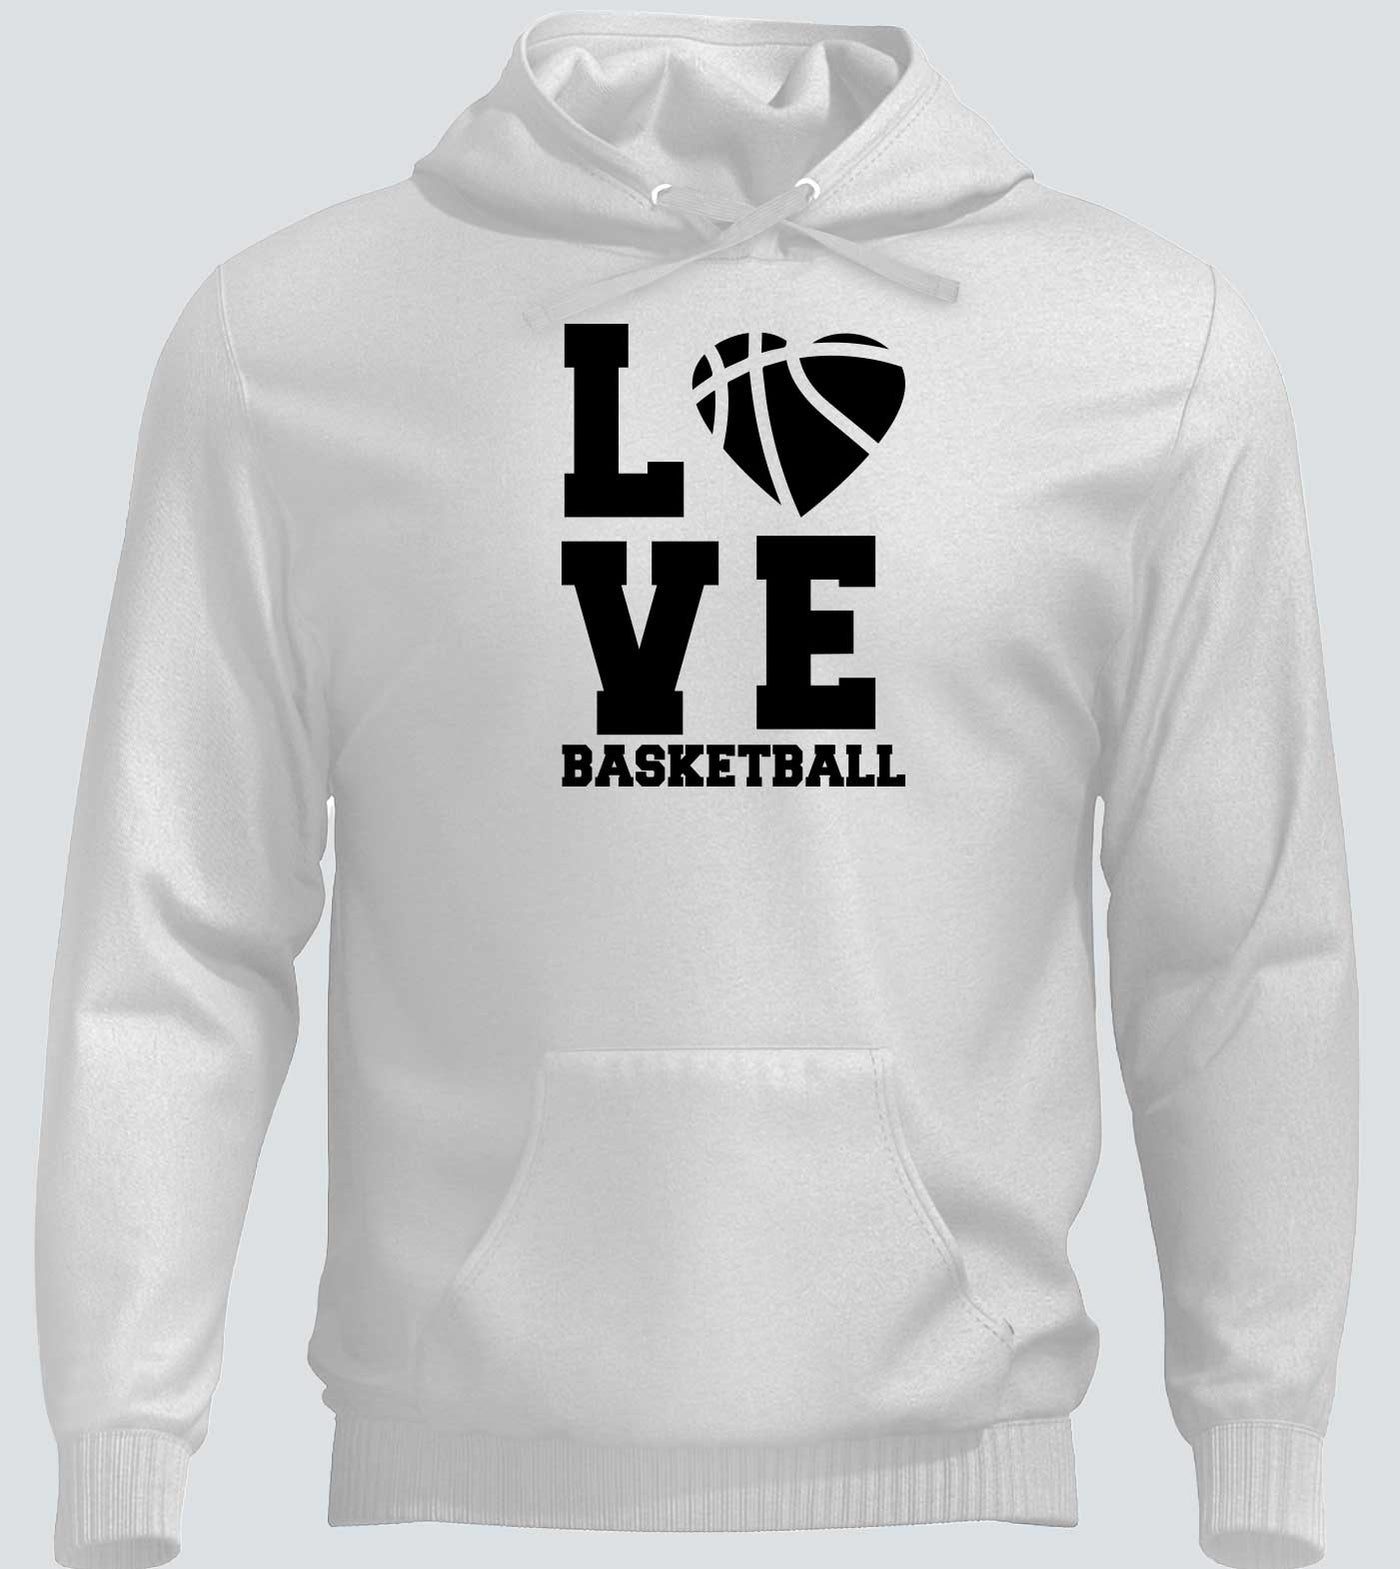 Love Basketball Hoodies